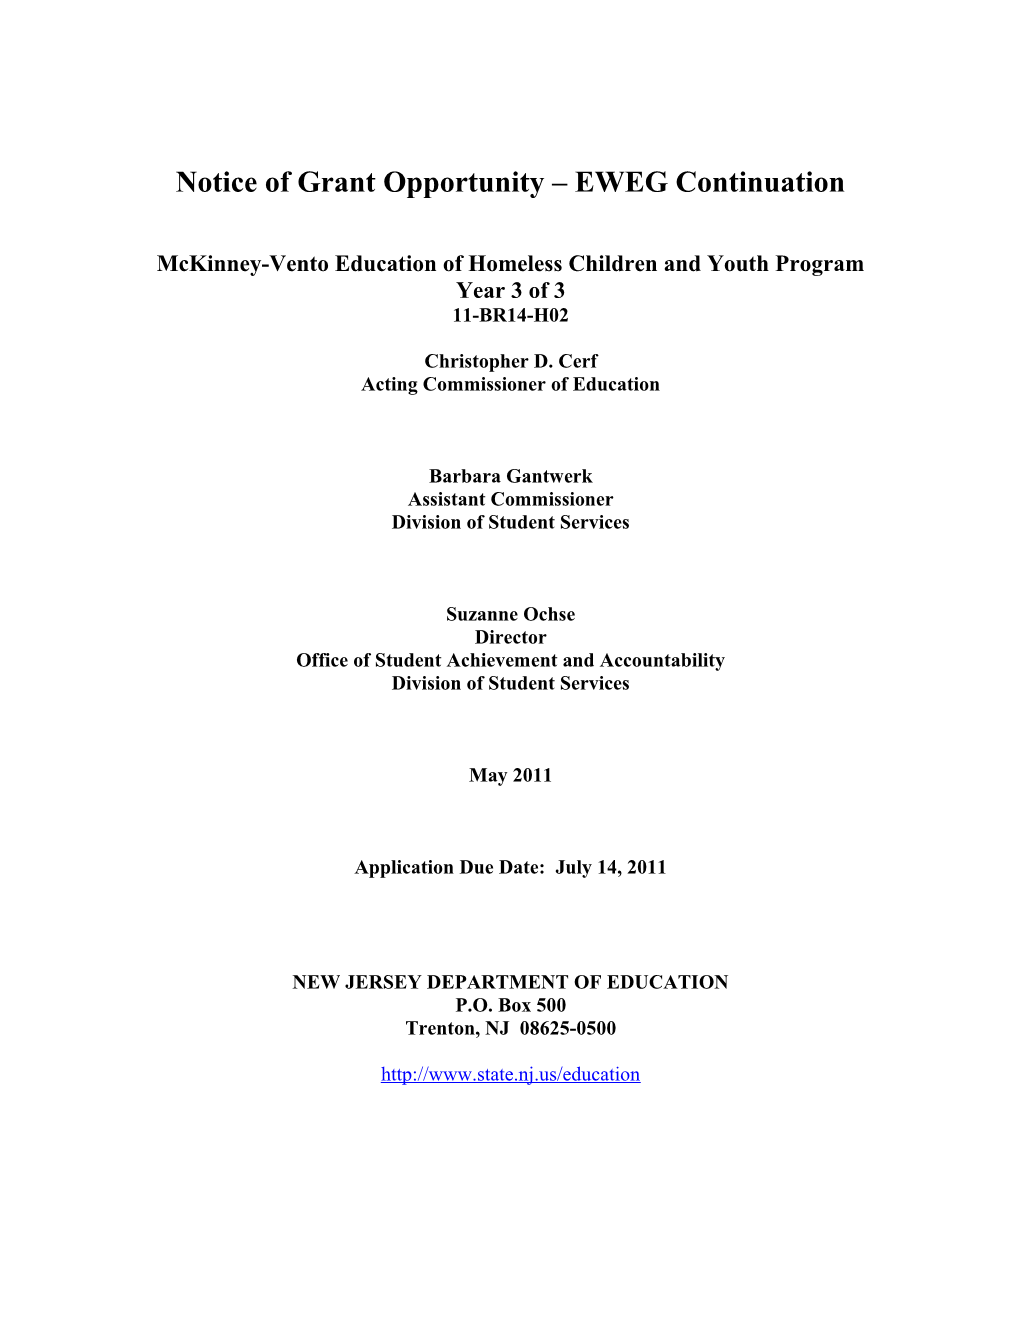 Notice of Grant Opportunity EWEG Continuation